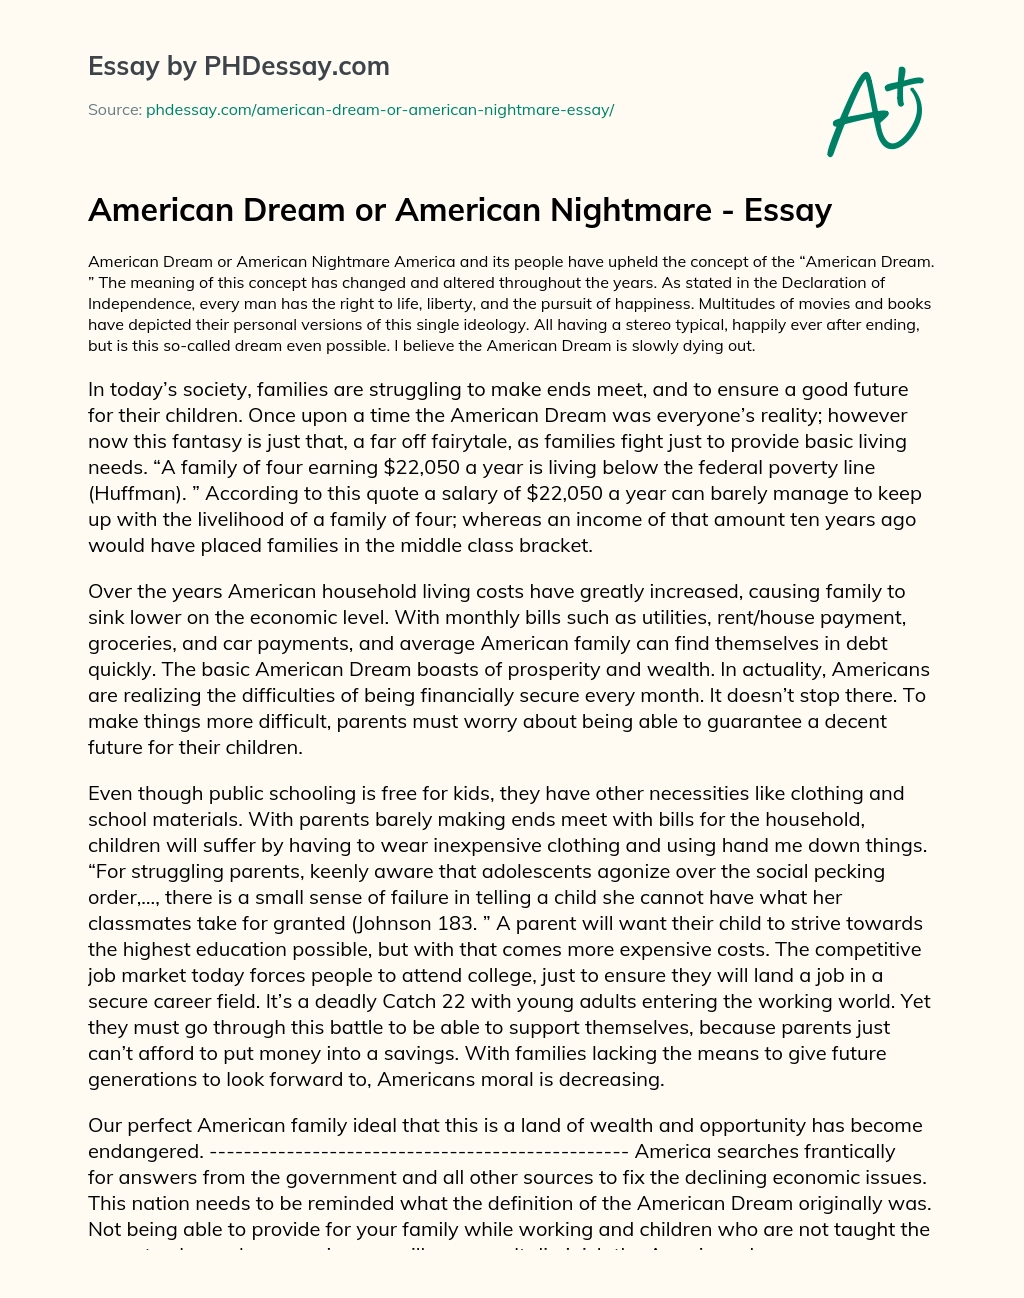 american nightmare essay